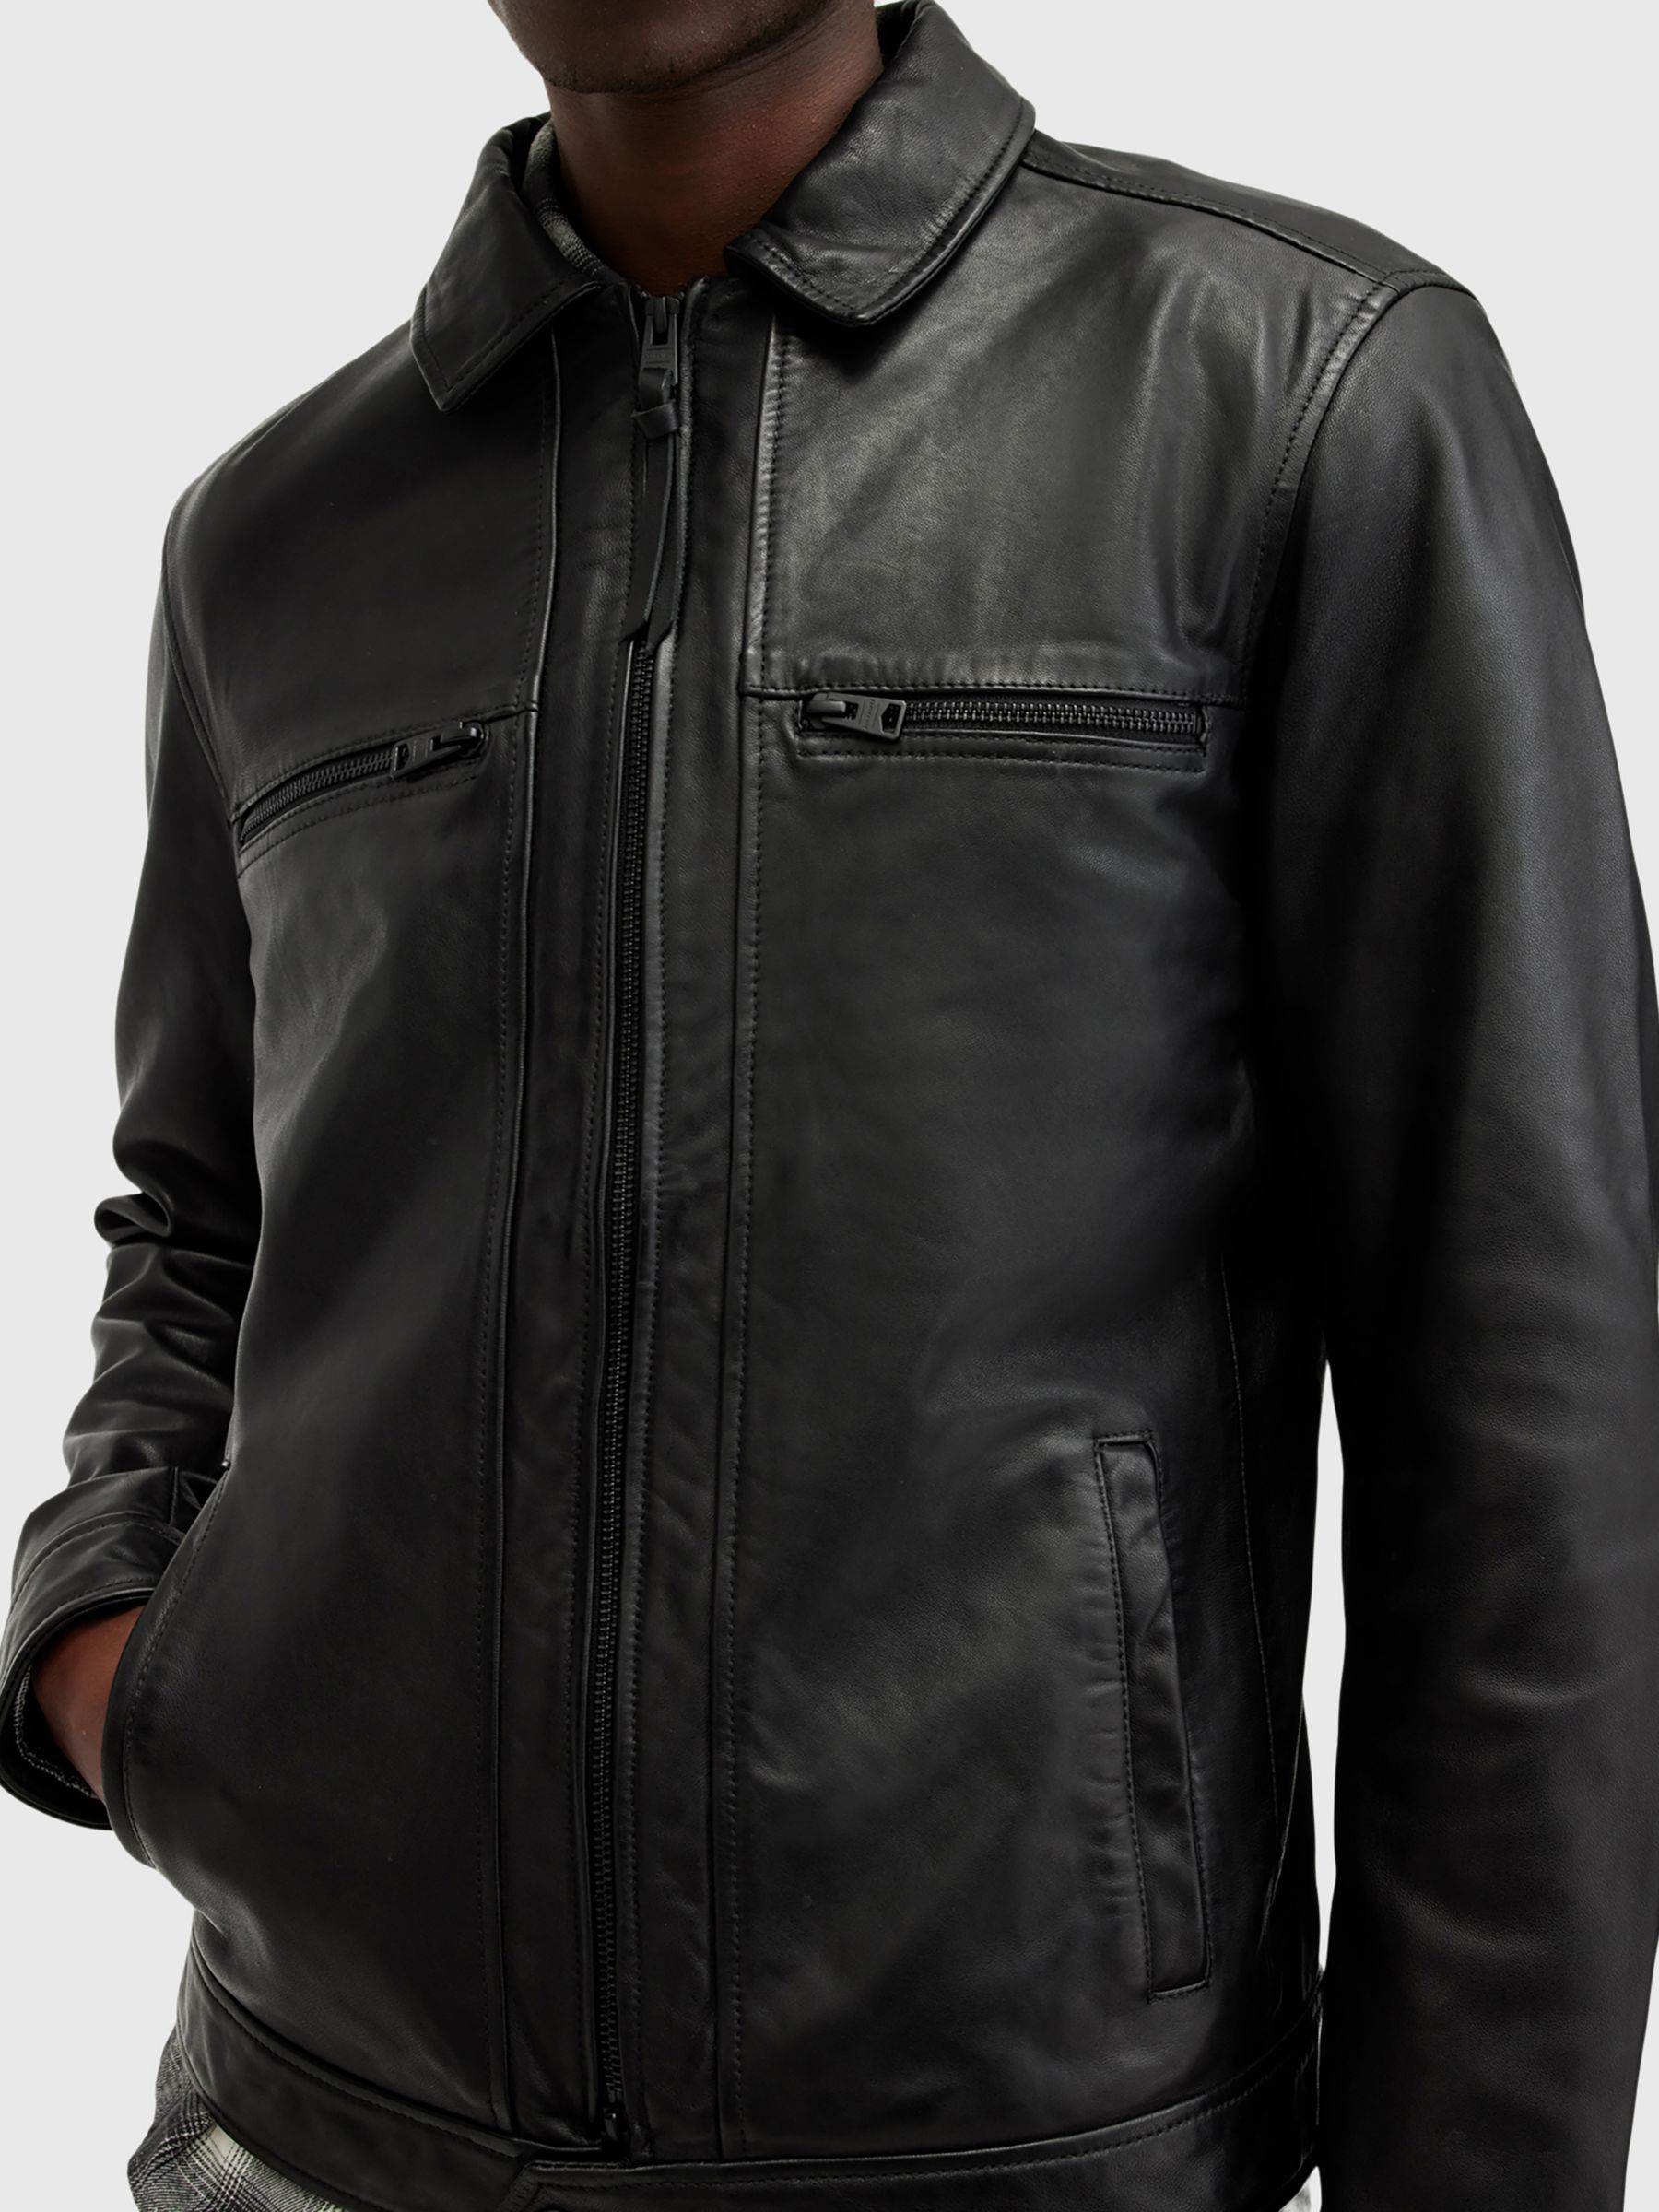 AllSaints Luck Leather Jacket, Black, L